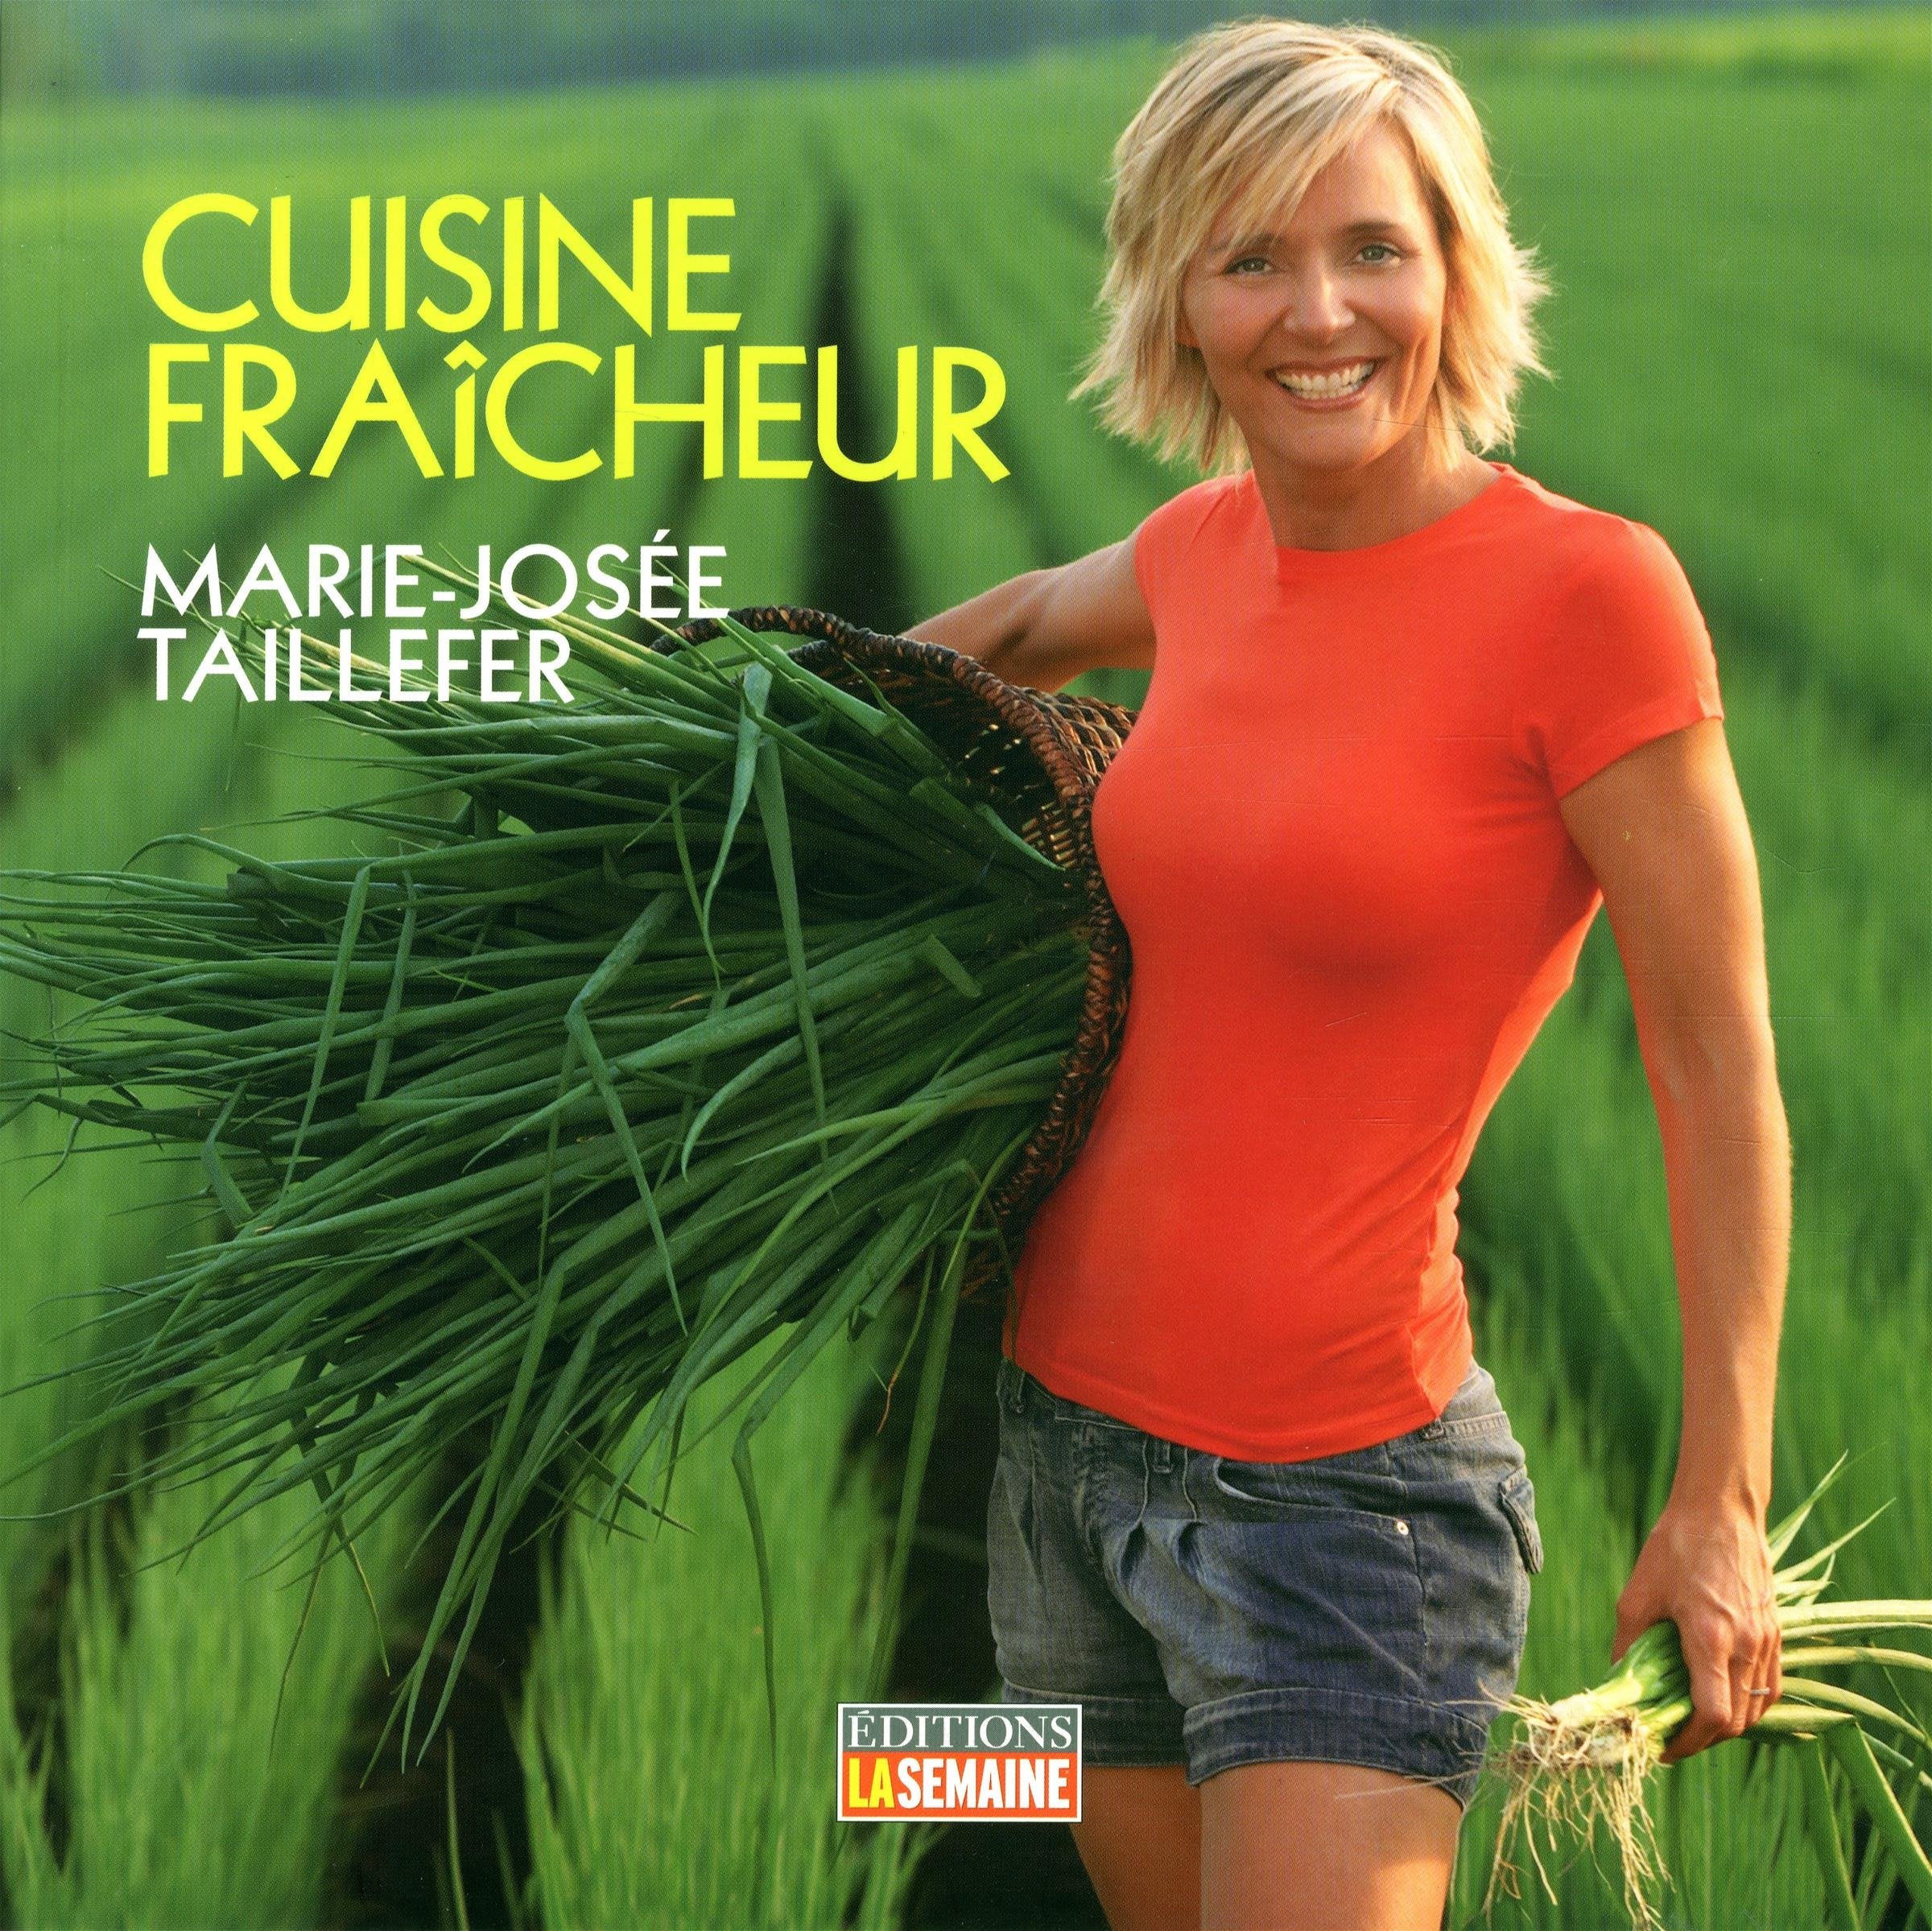 Cuisine fraîcheur - Marie-Josée Taillefer